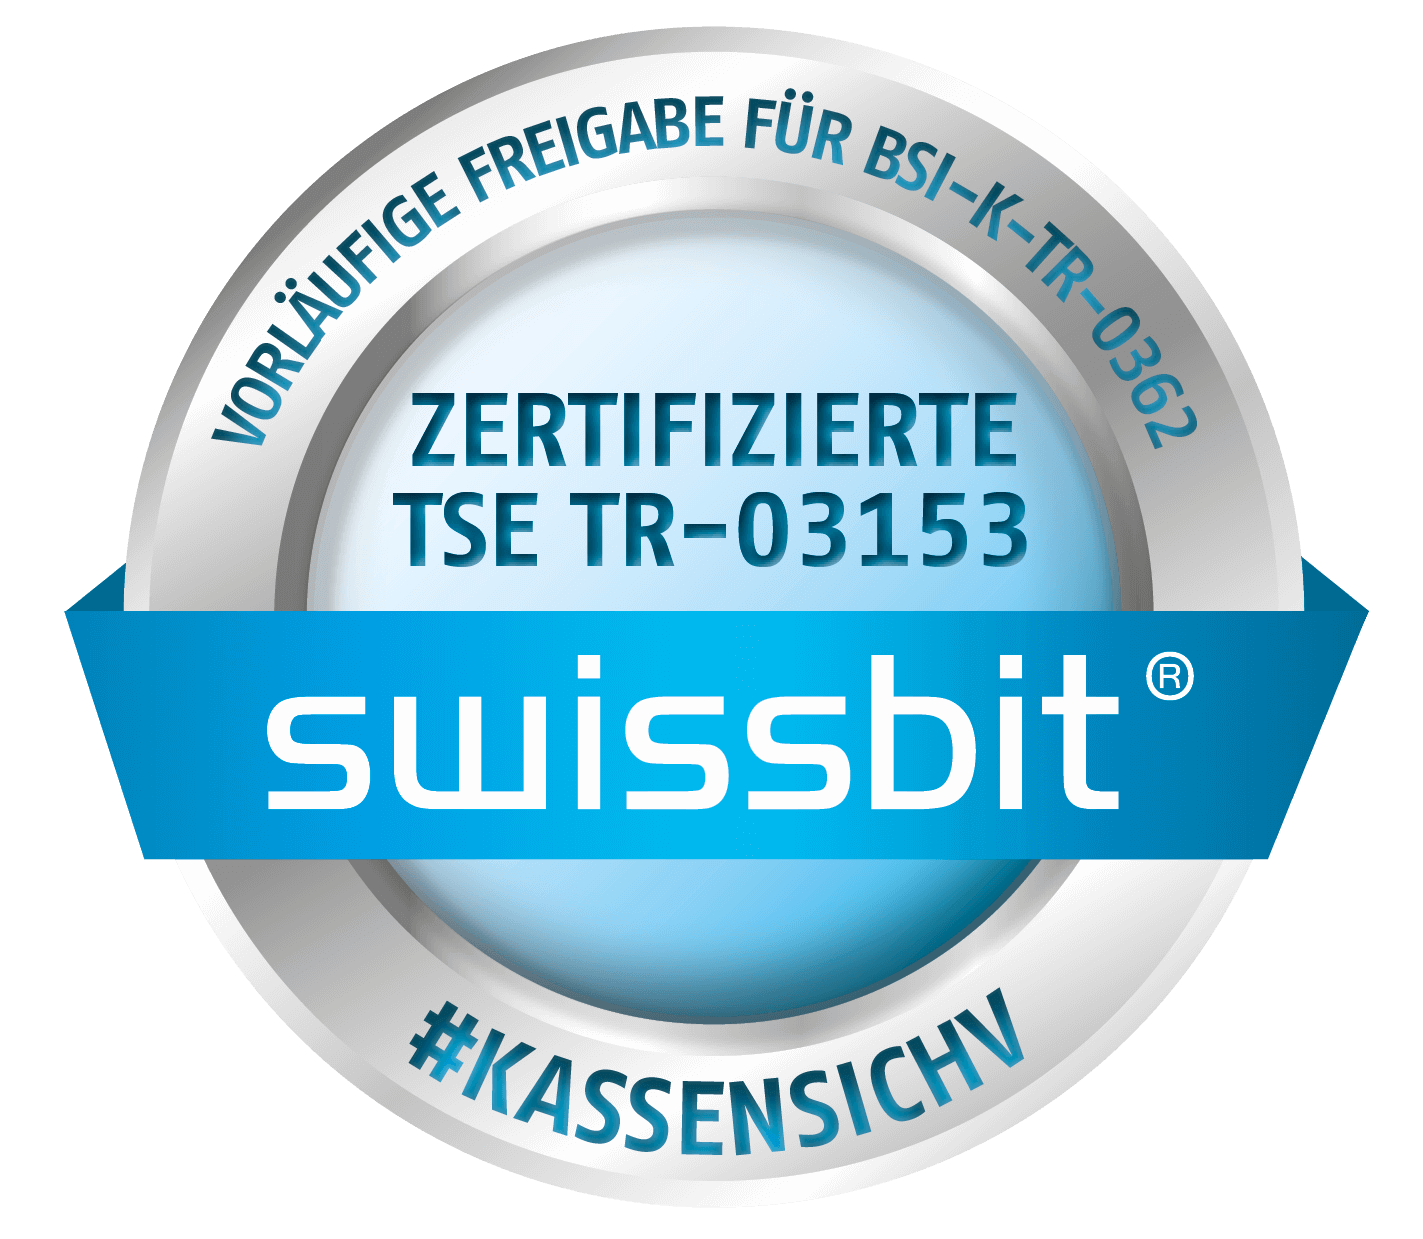 Swissbit Zertifikat KassenSichV